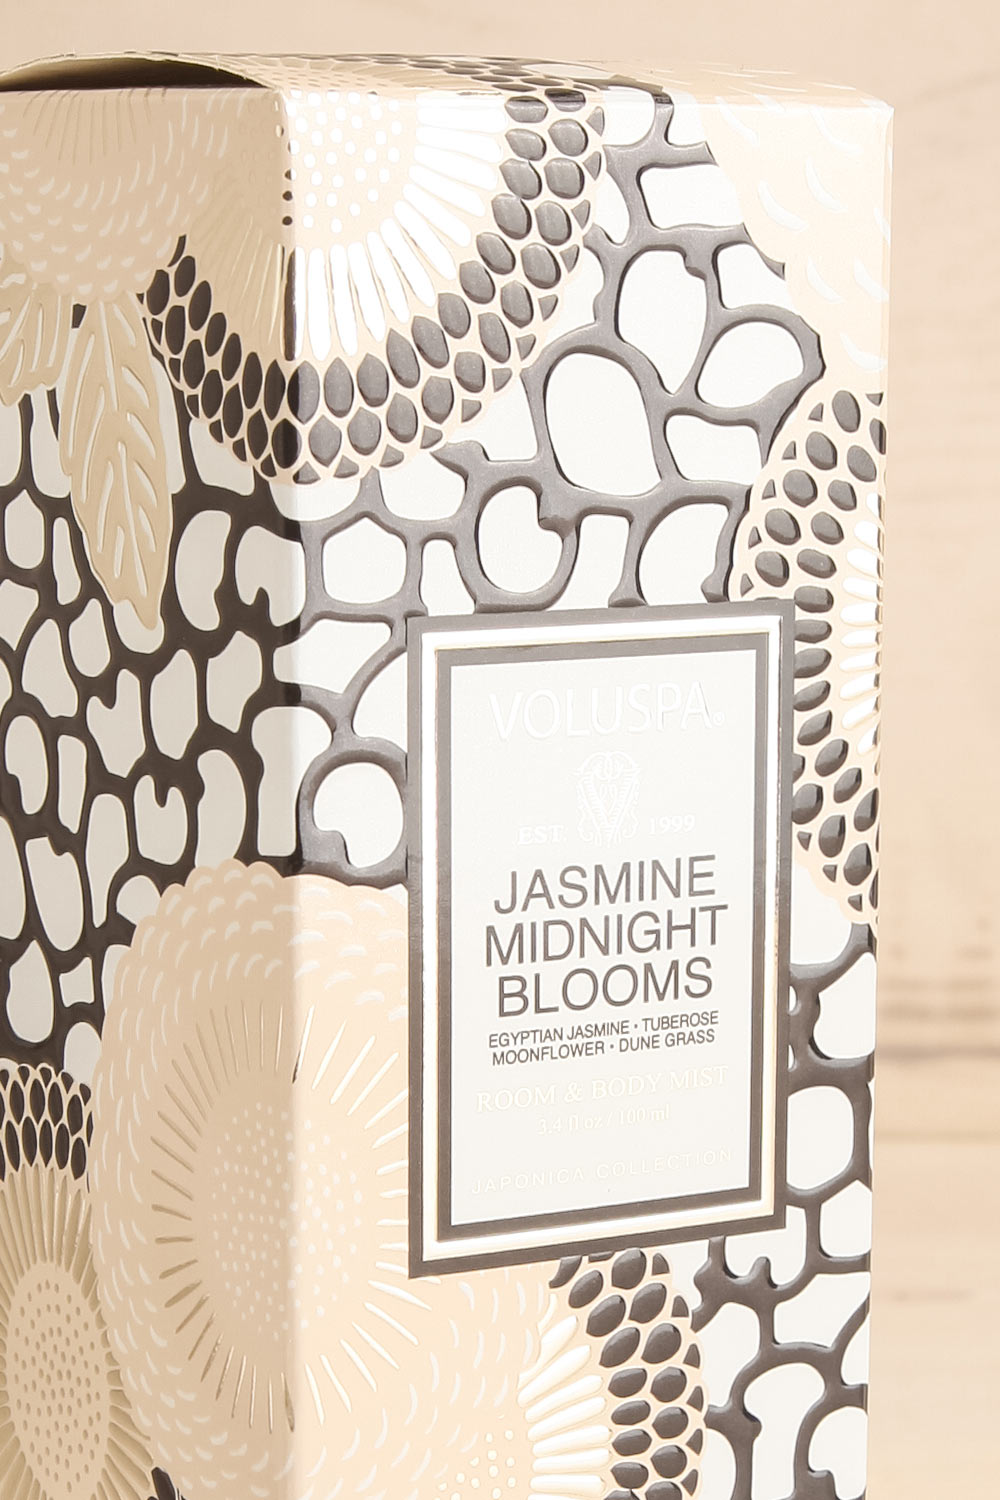 Jasmine Midnight Blooms | Maison garçonne box close-up